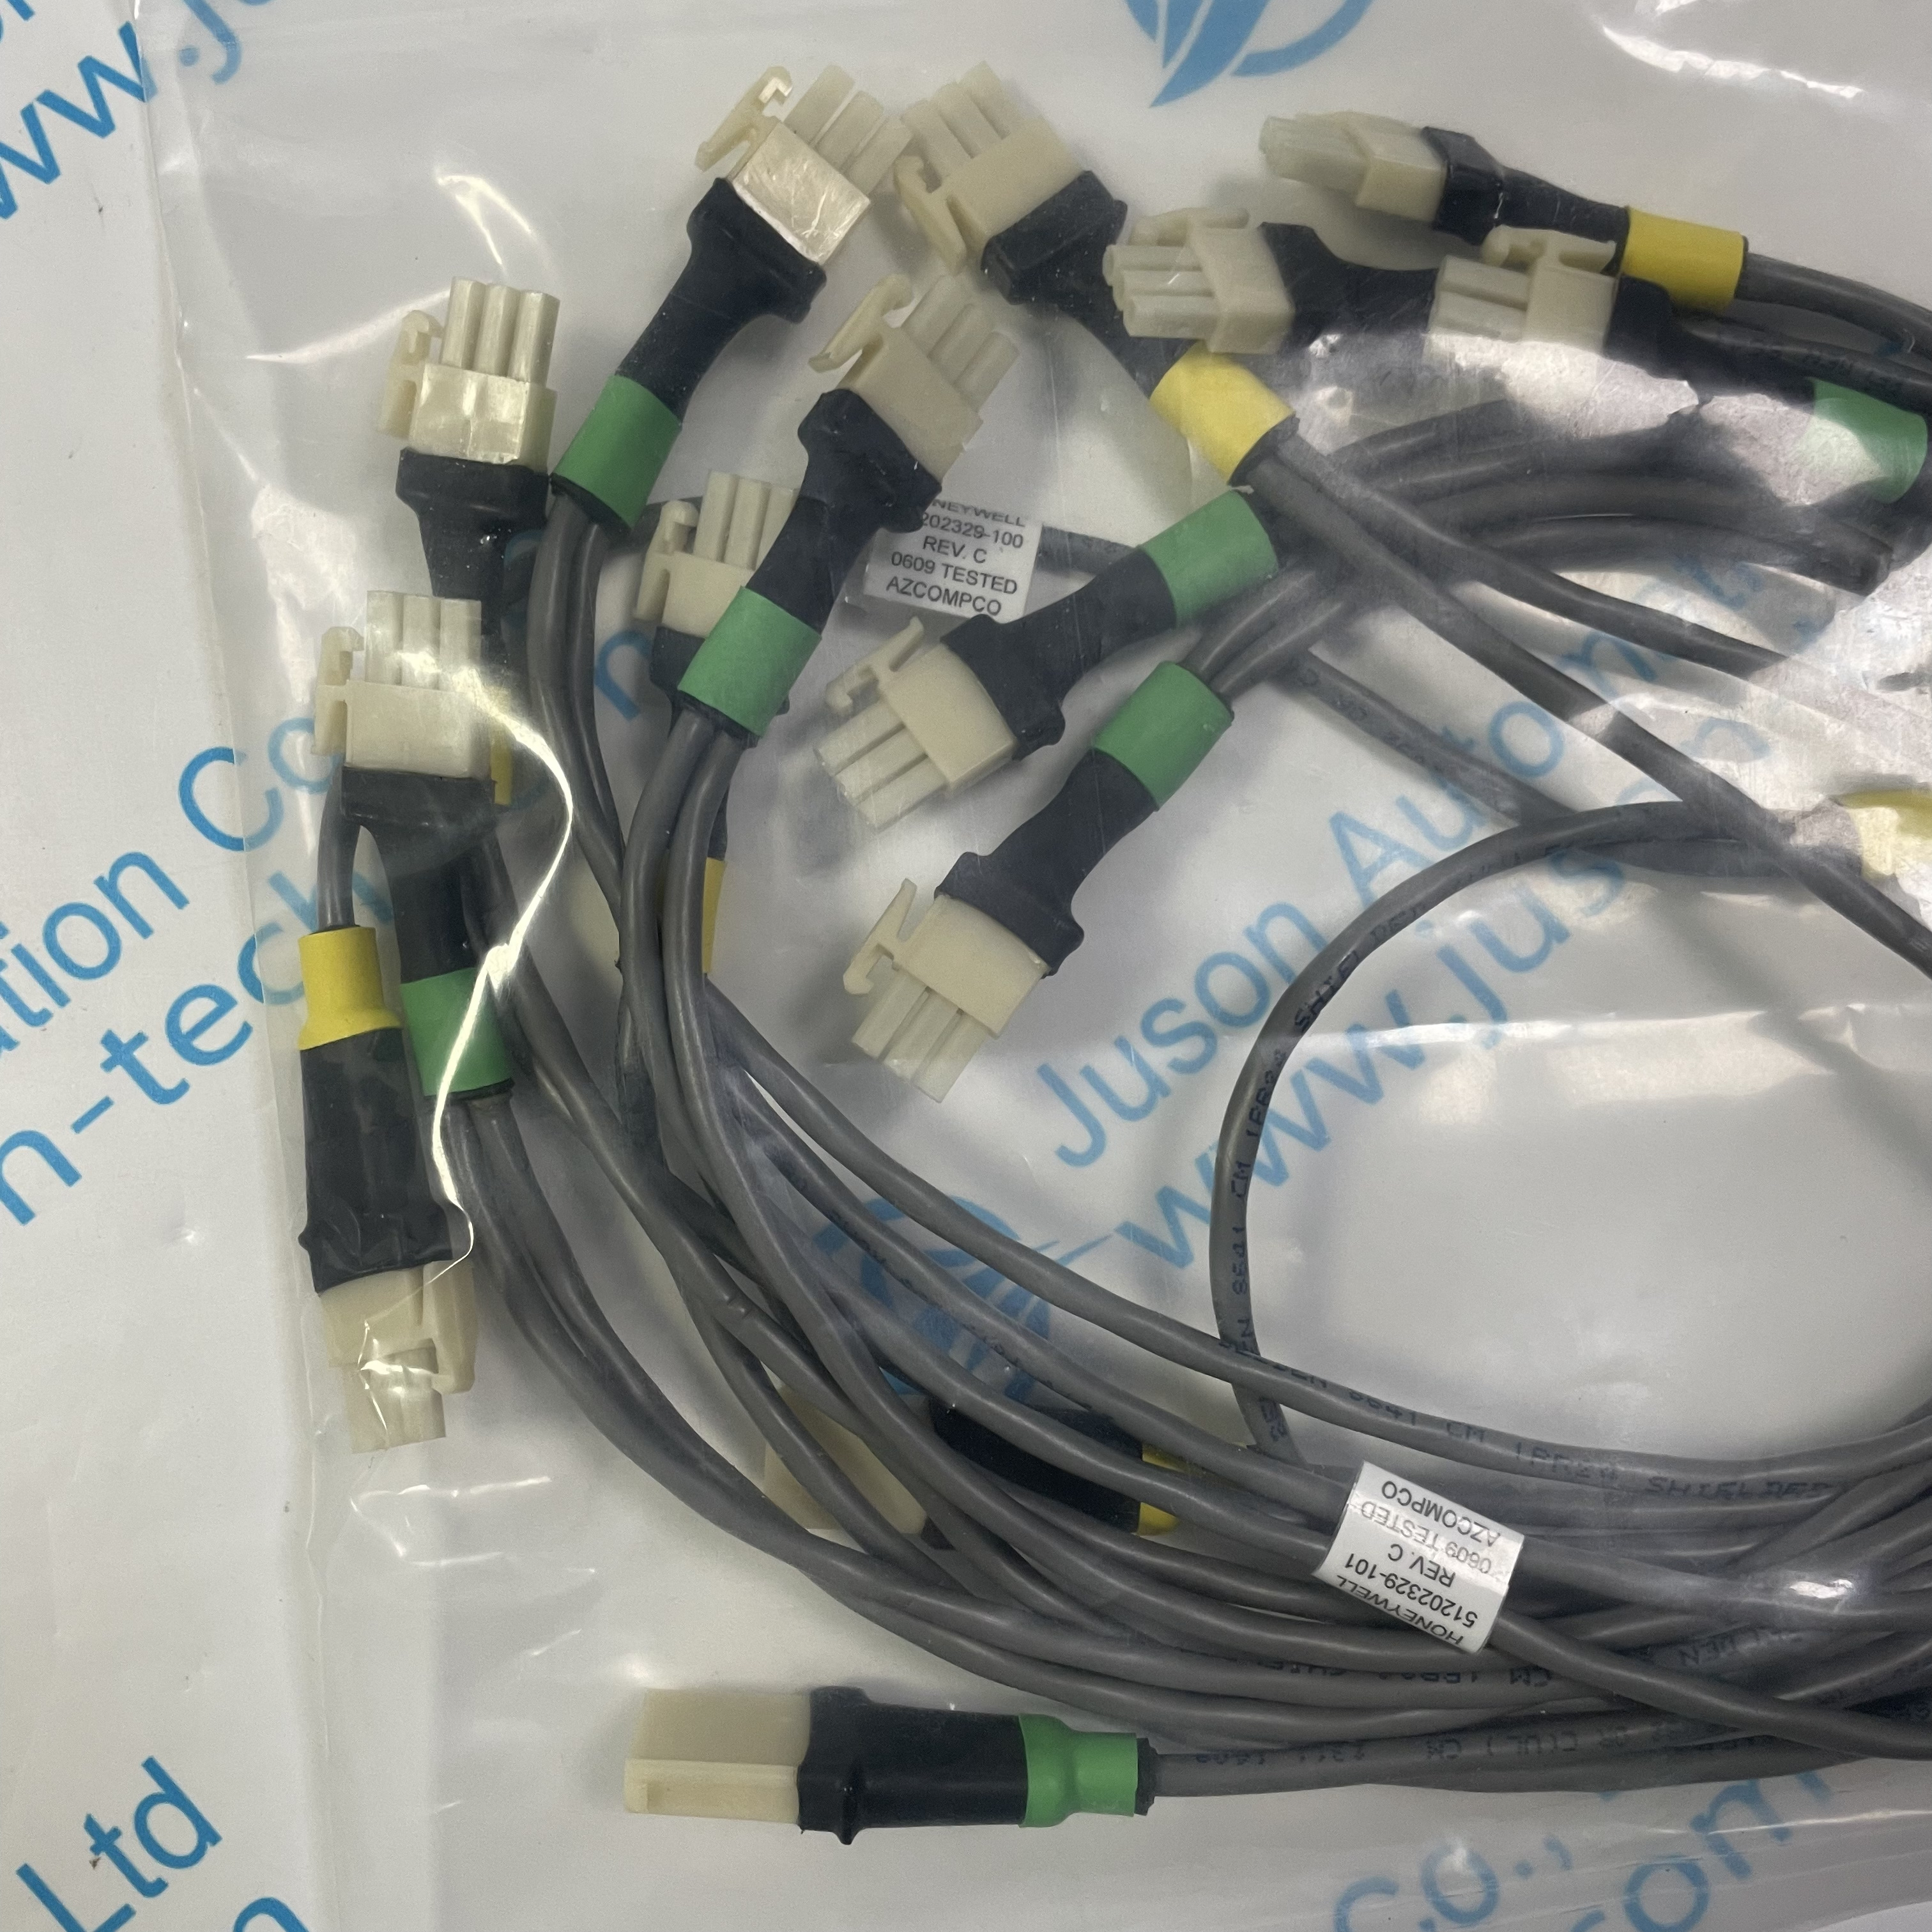 Honeywell Cable Module 51202329-102